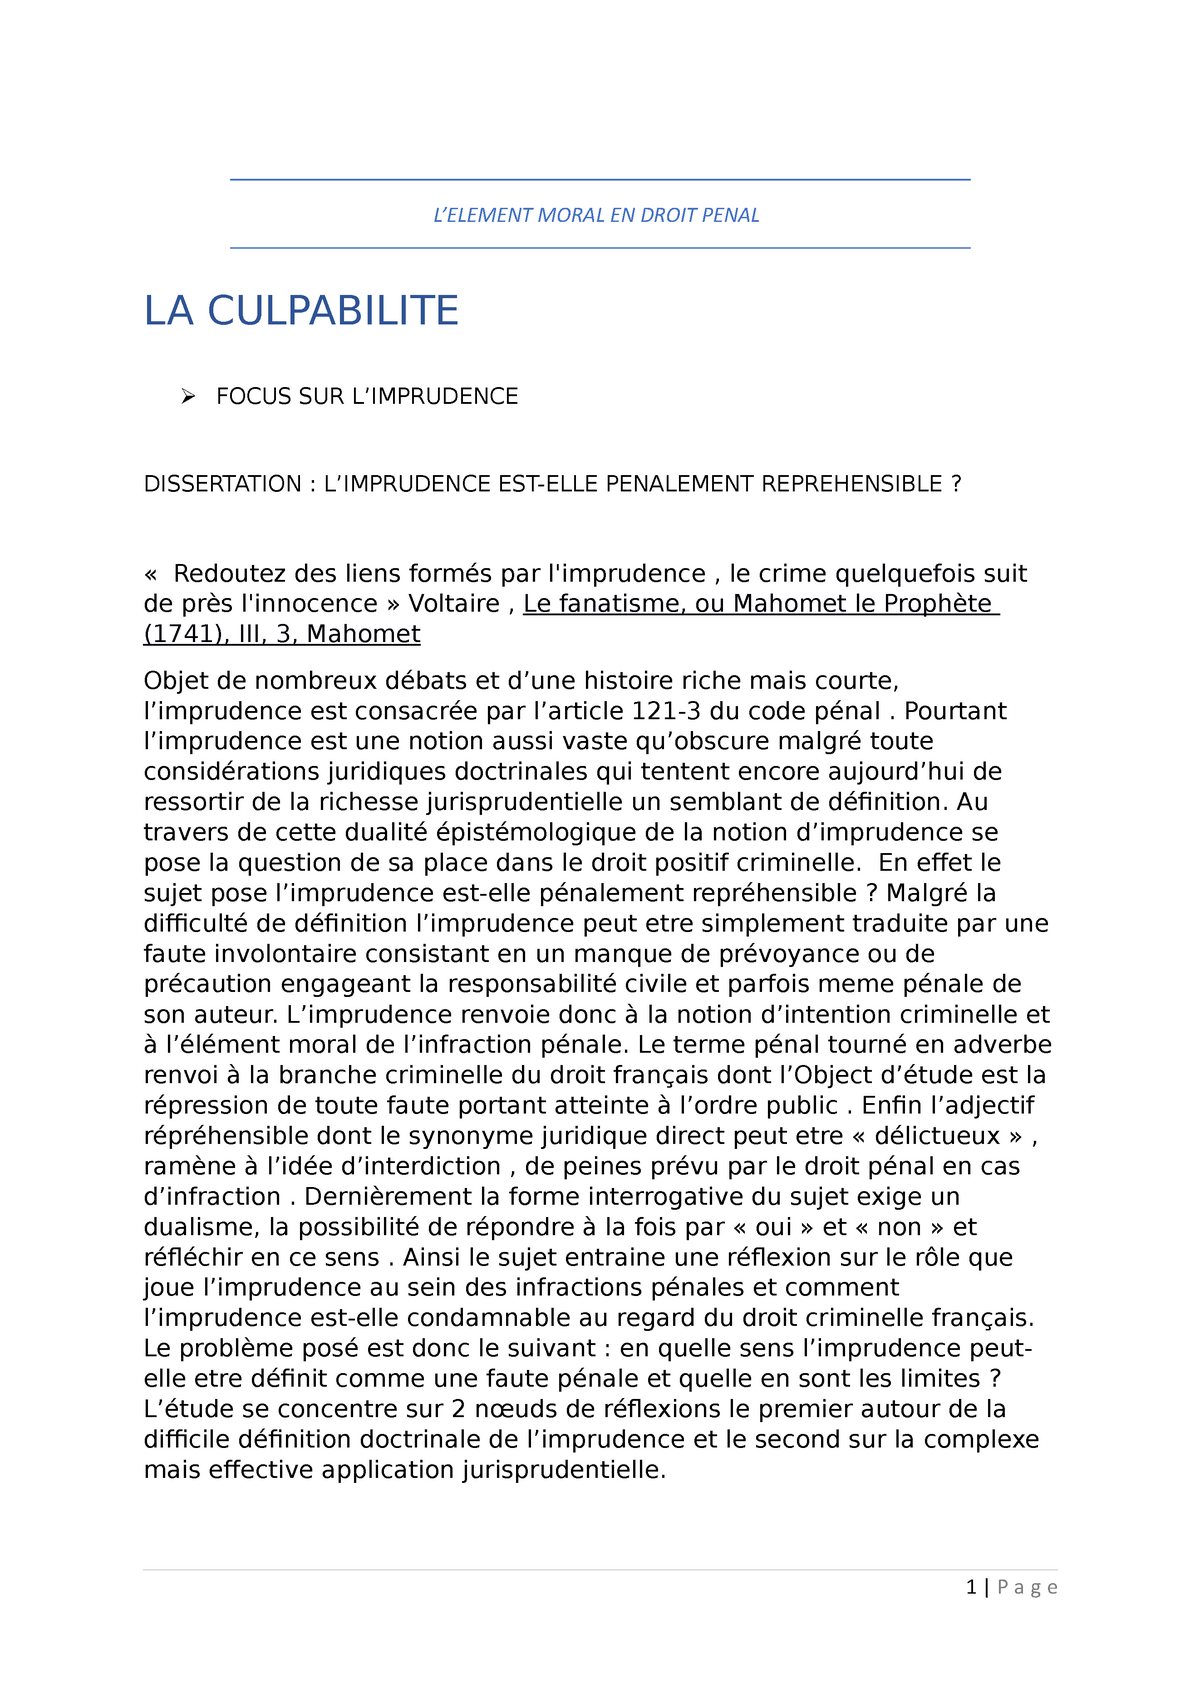 dissertation droit penal pdf